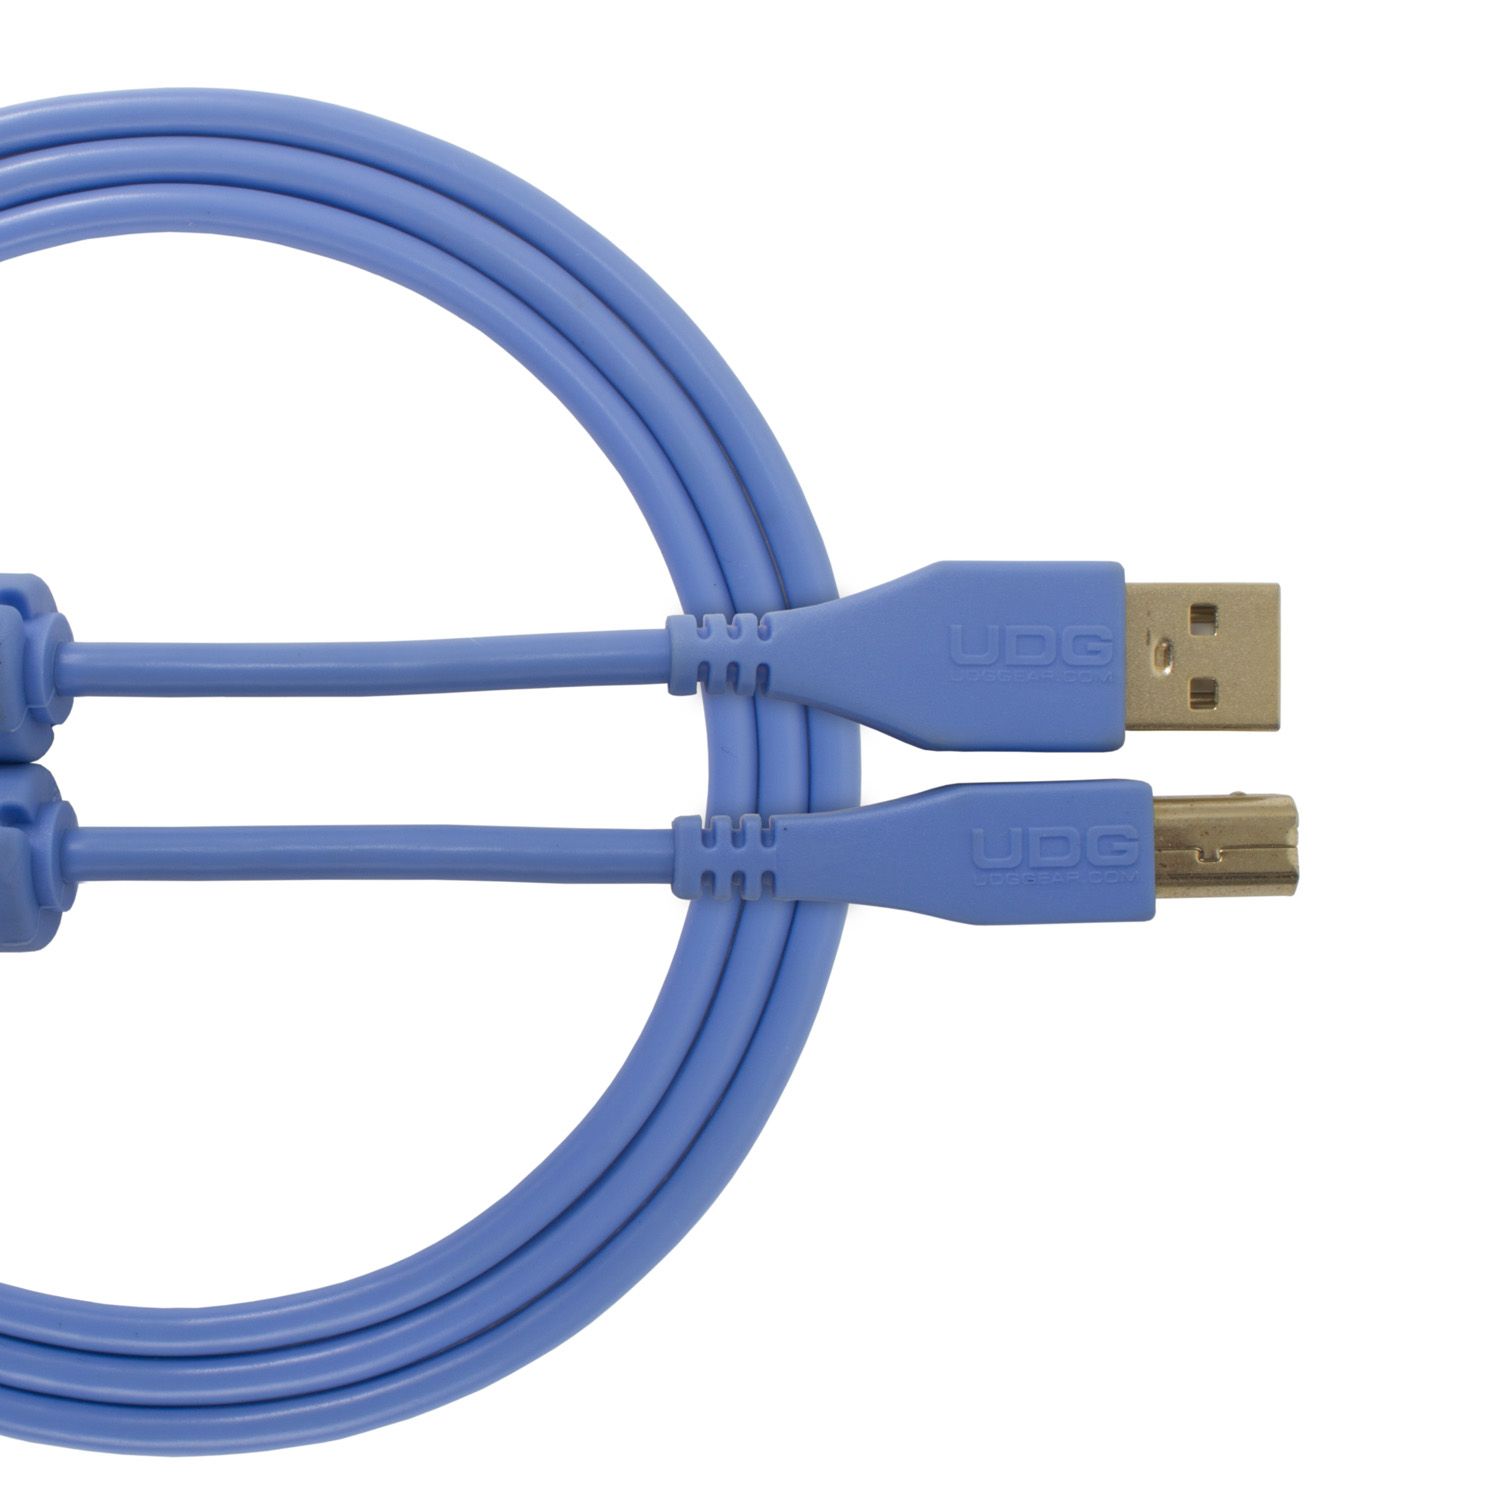 U95001LB UDG AUDIO CABLE USB 2.0 A-B BLUE STRA 1M